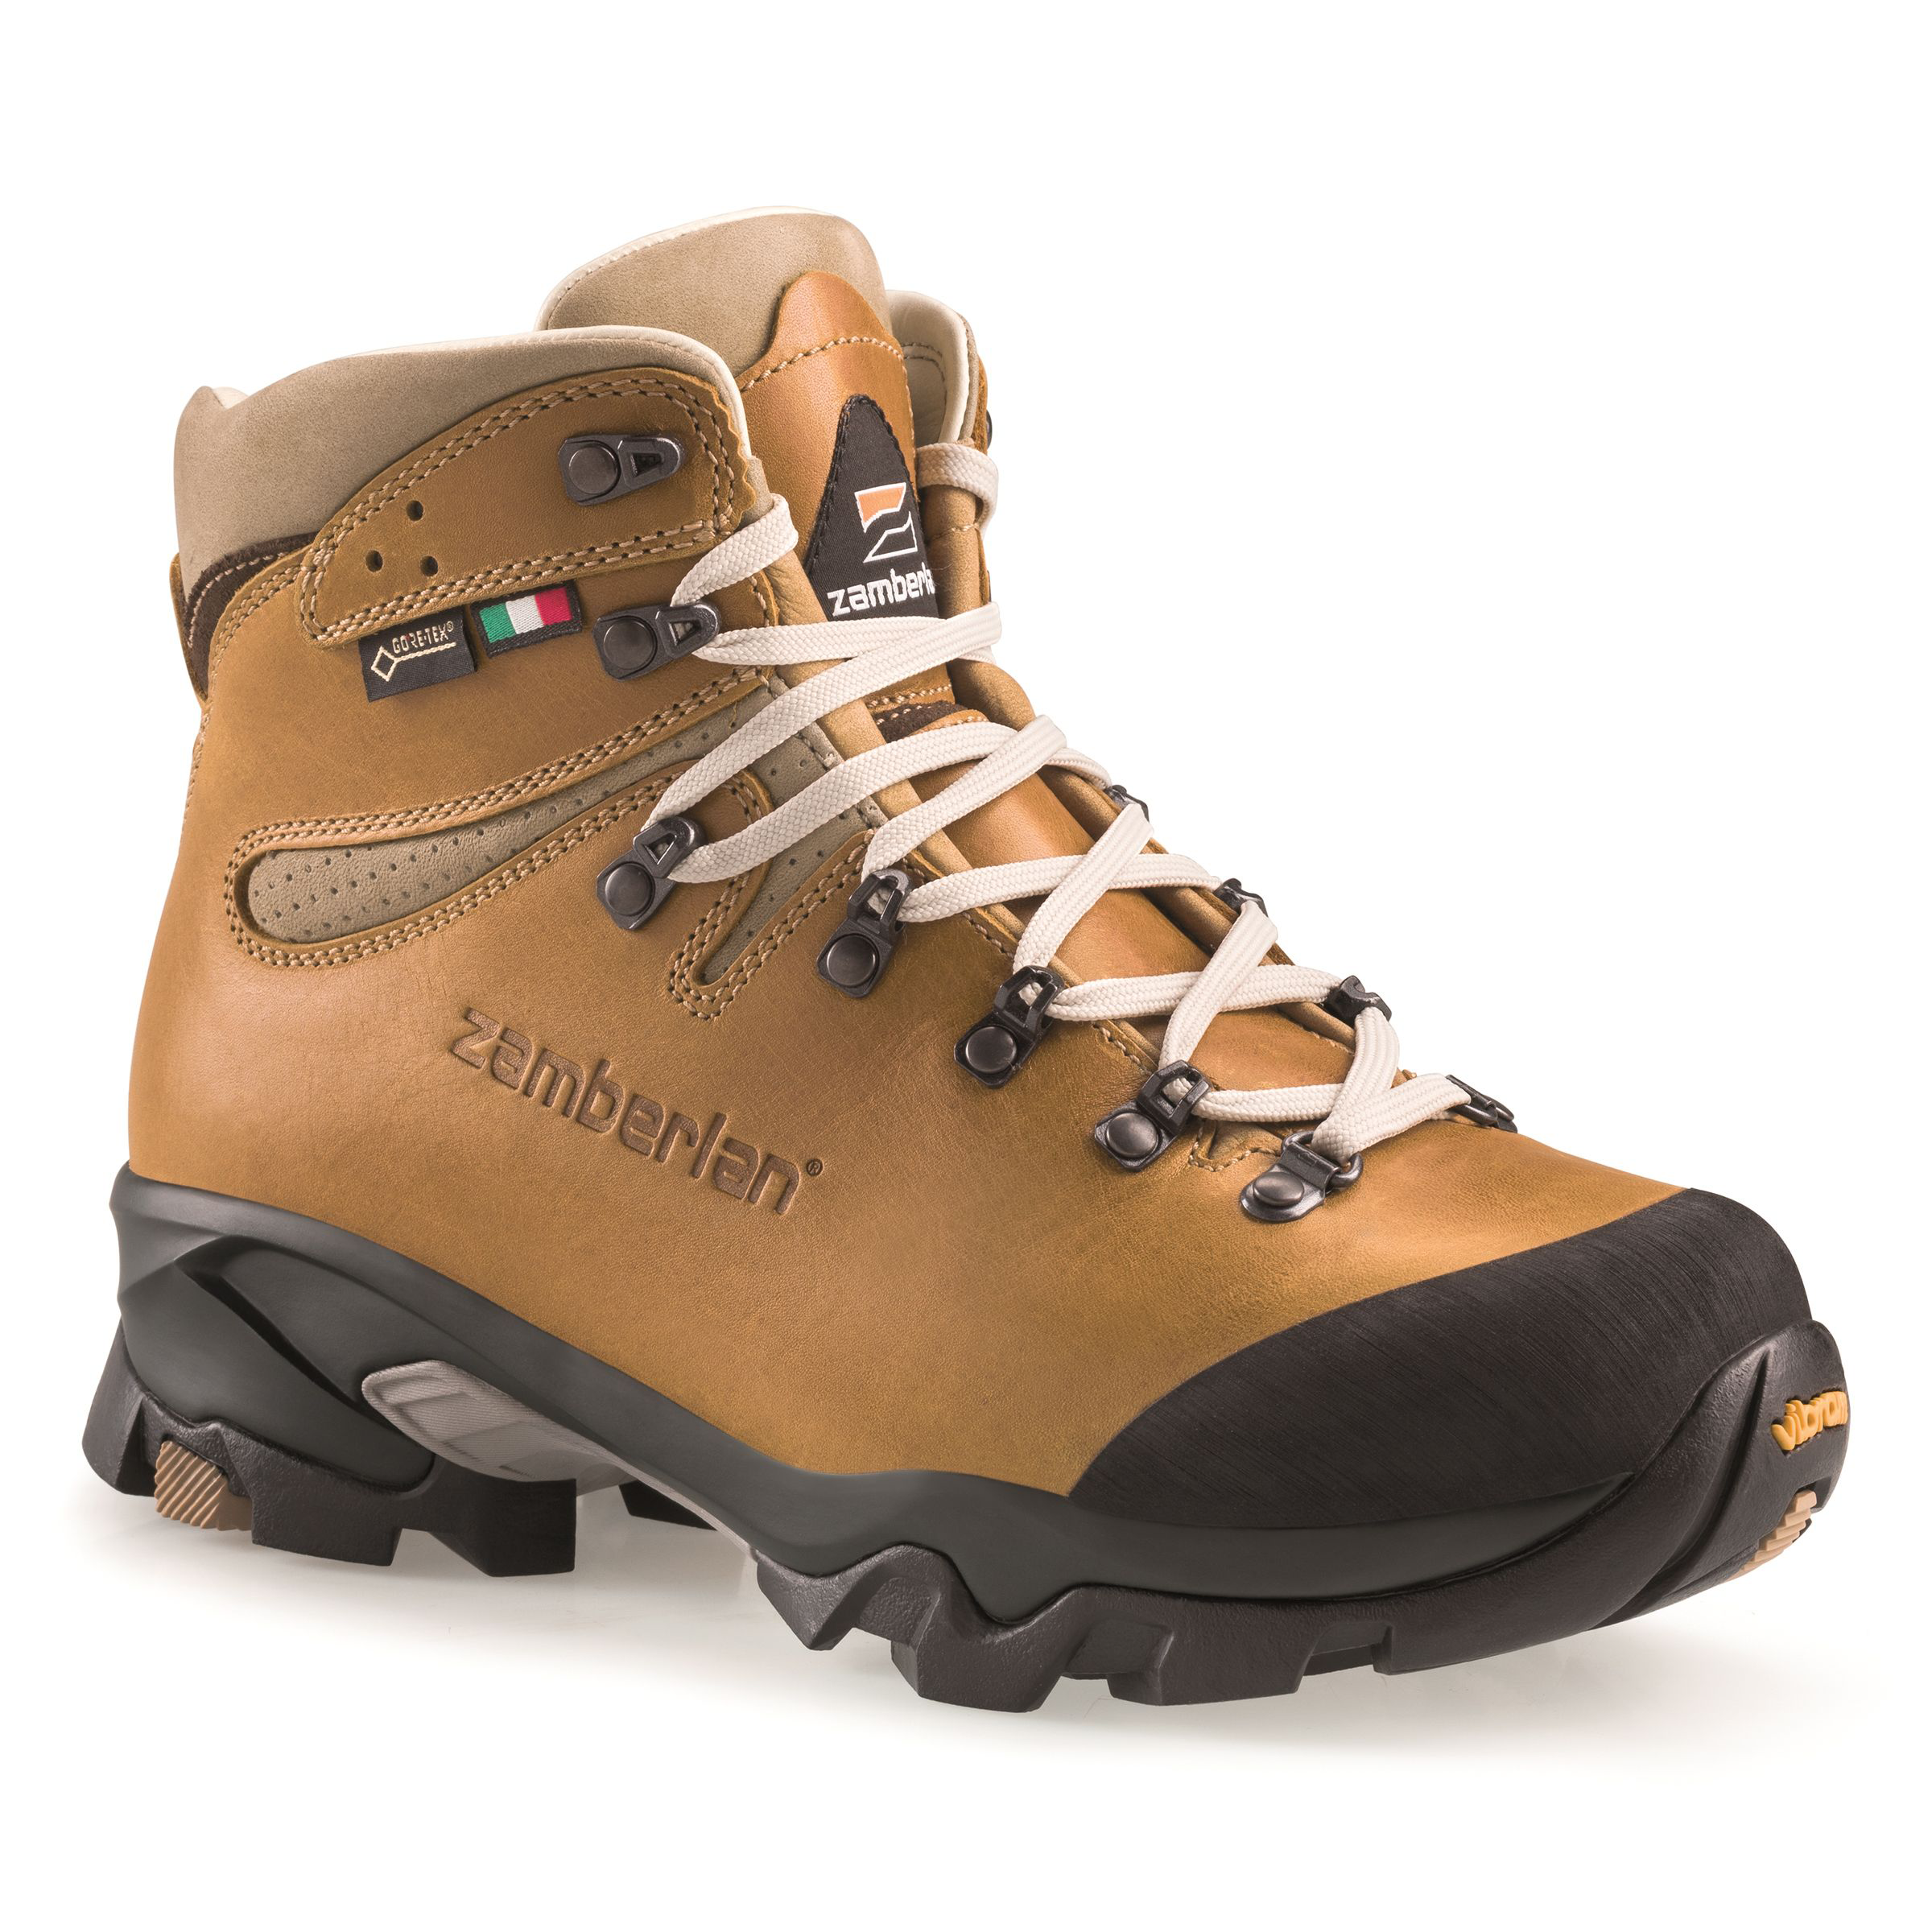 Zamberlan 1996 Vioz Lux GTX RR Waterproof Hiking Boots for Ladies - Brown - 9.5M